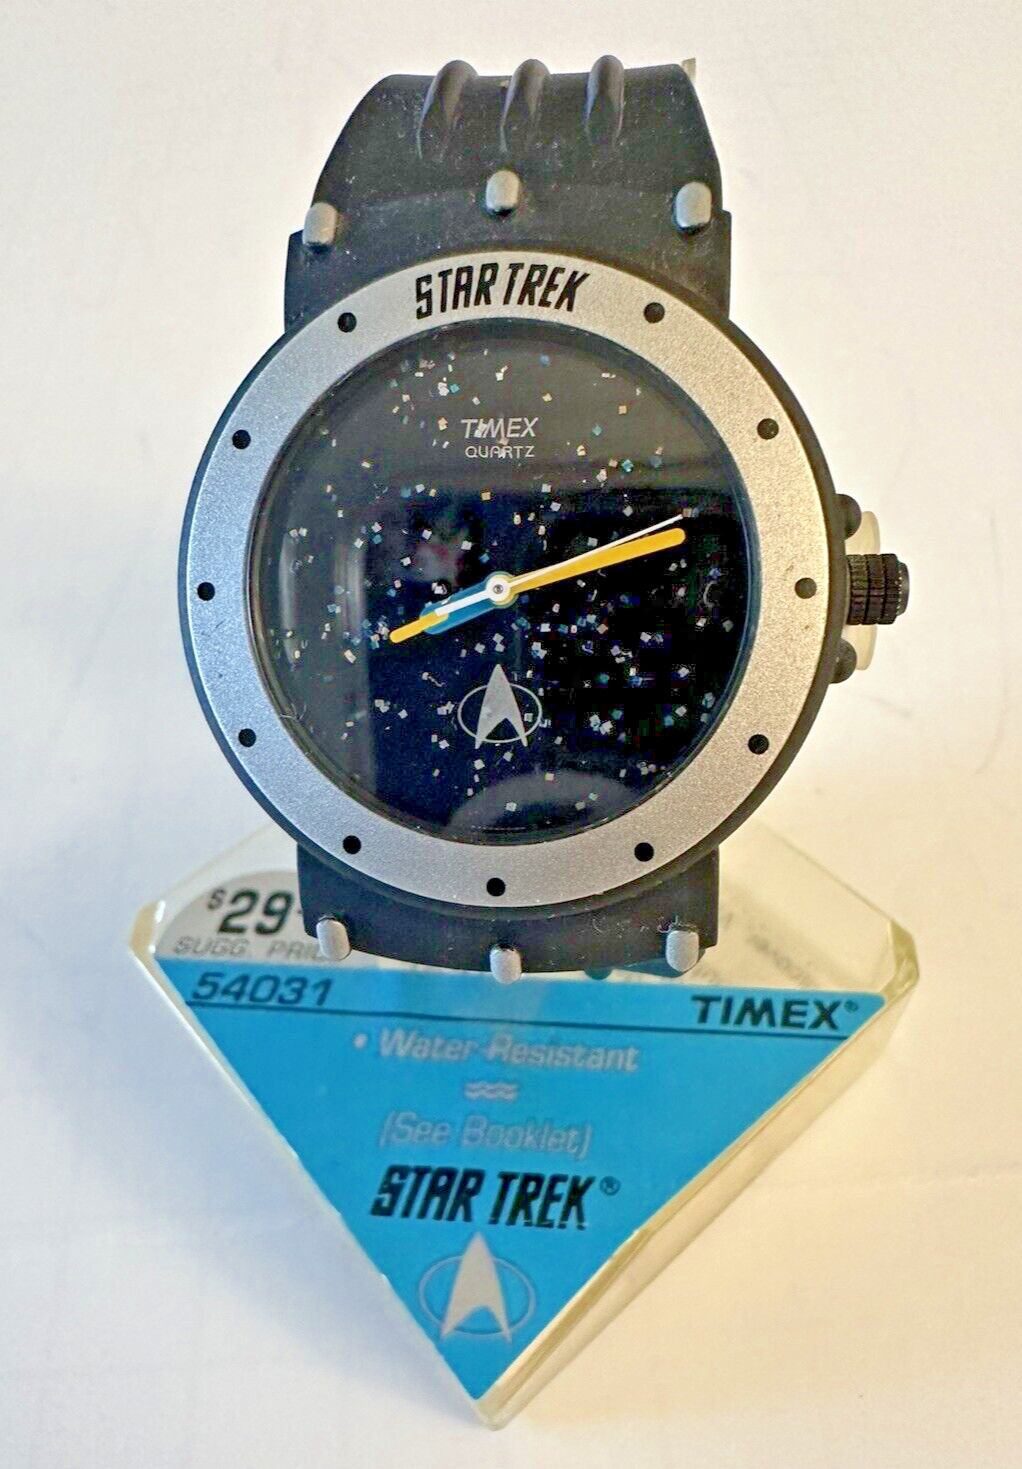 1990s Timex Star Trek Wrist Watch w/Stars- Unworn w/Battery Tab, Water Resistant